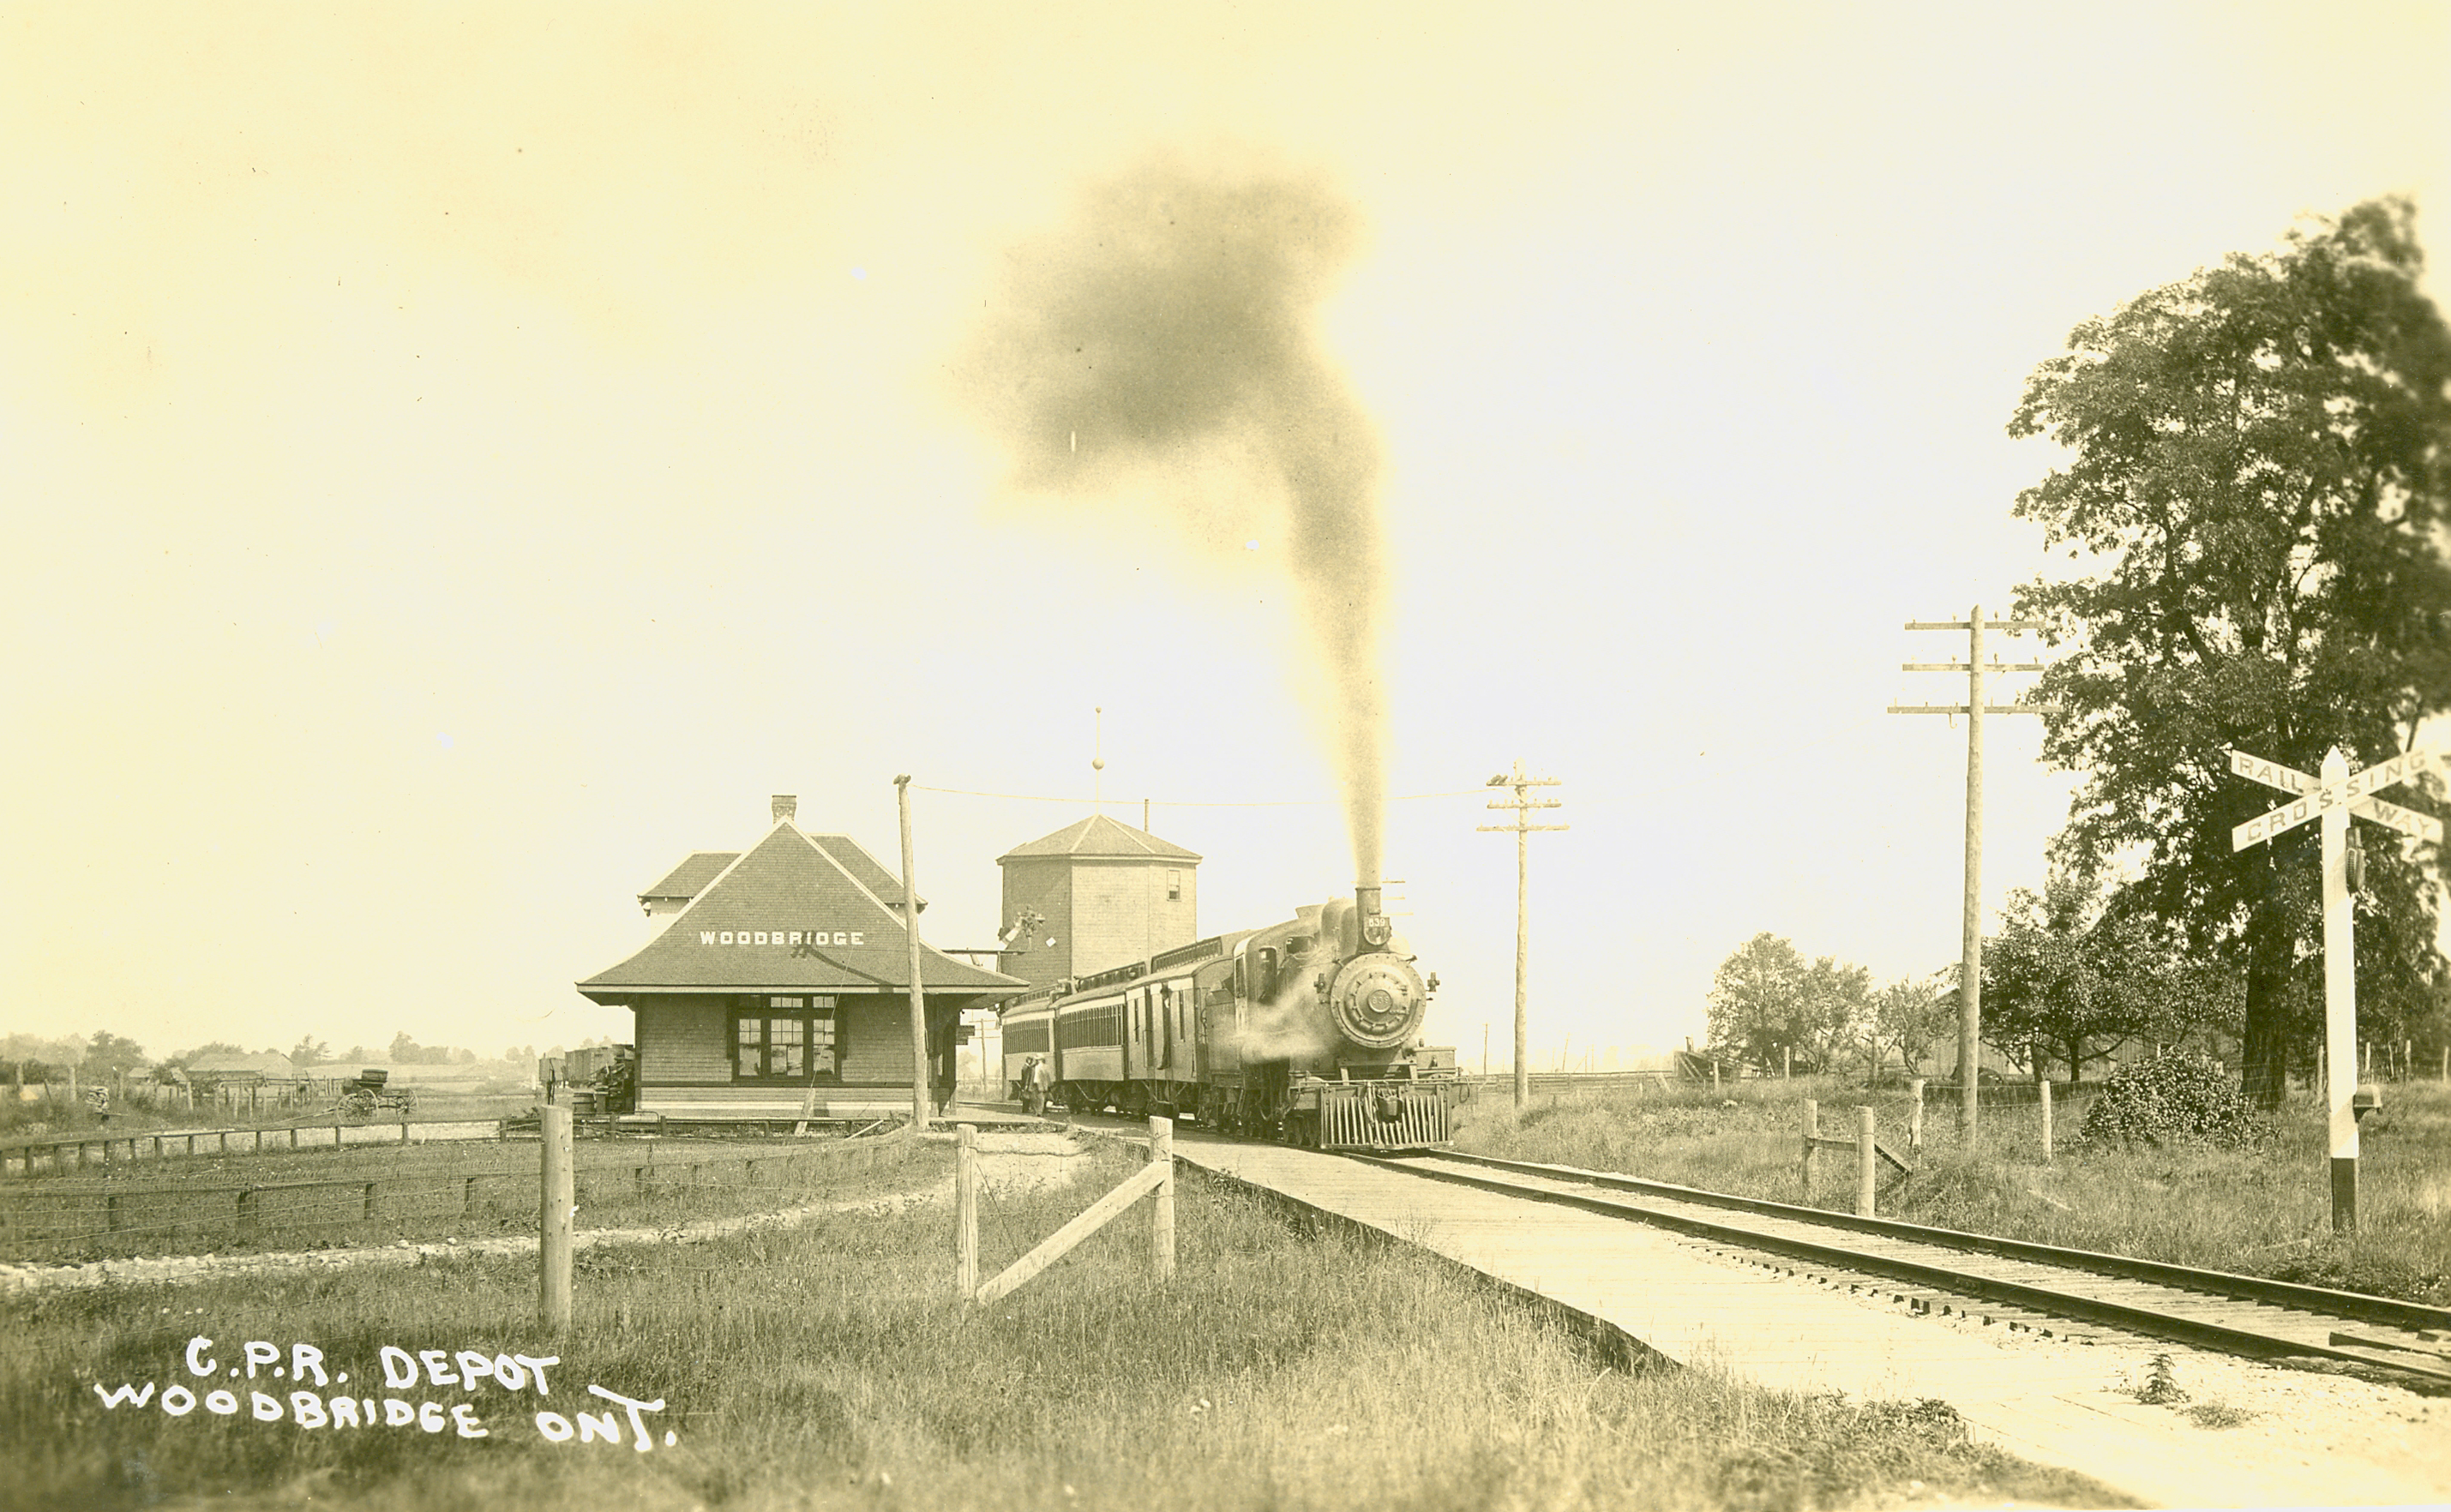 Woodbridge Canadian Pacific Railway Depot, ca. 1900